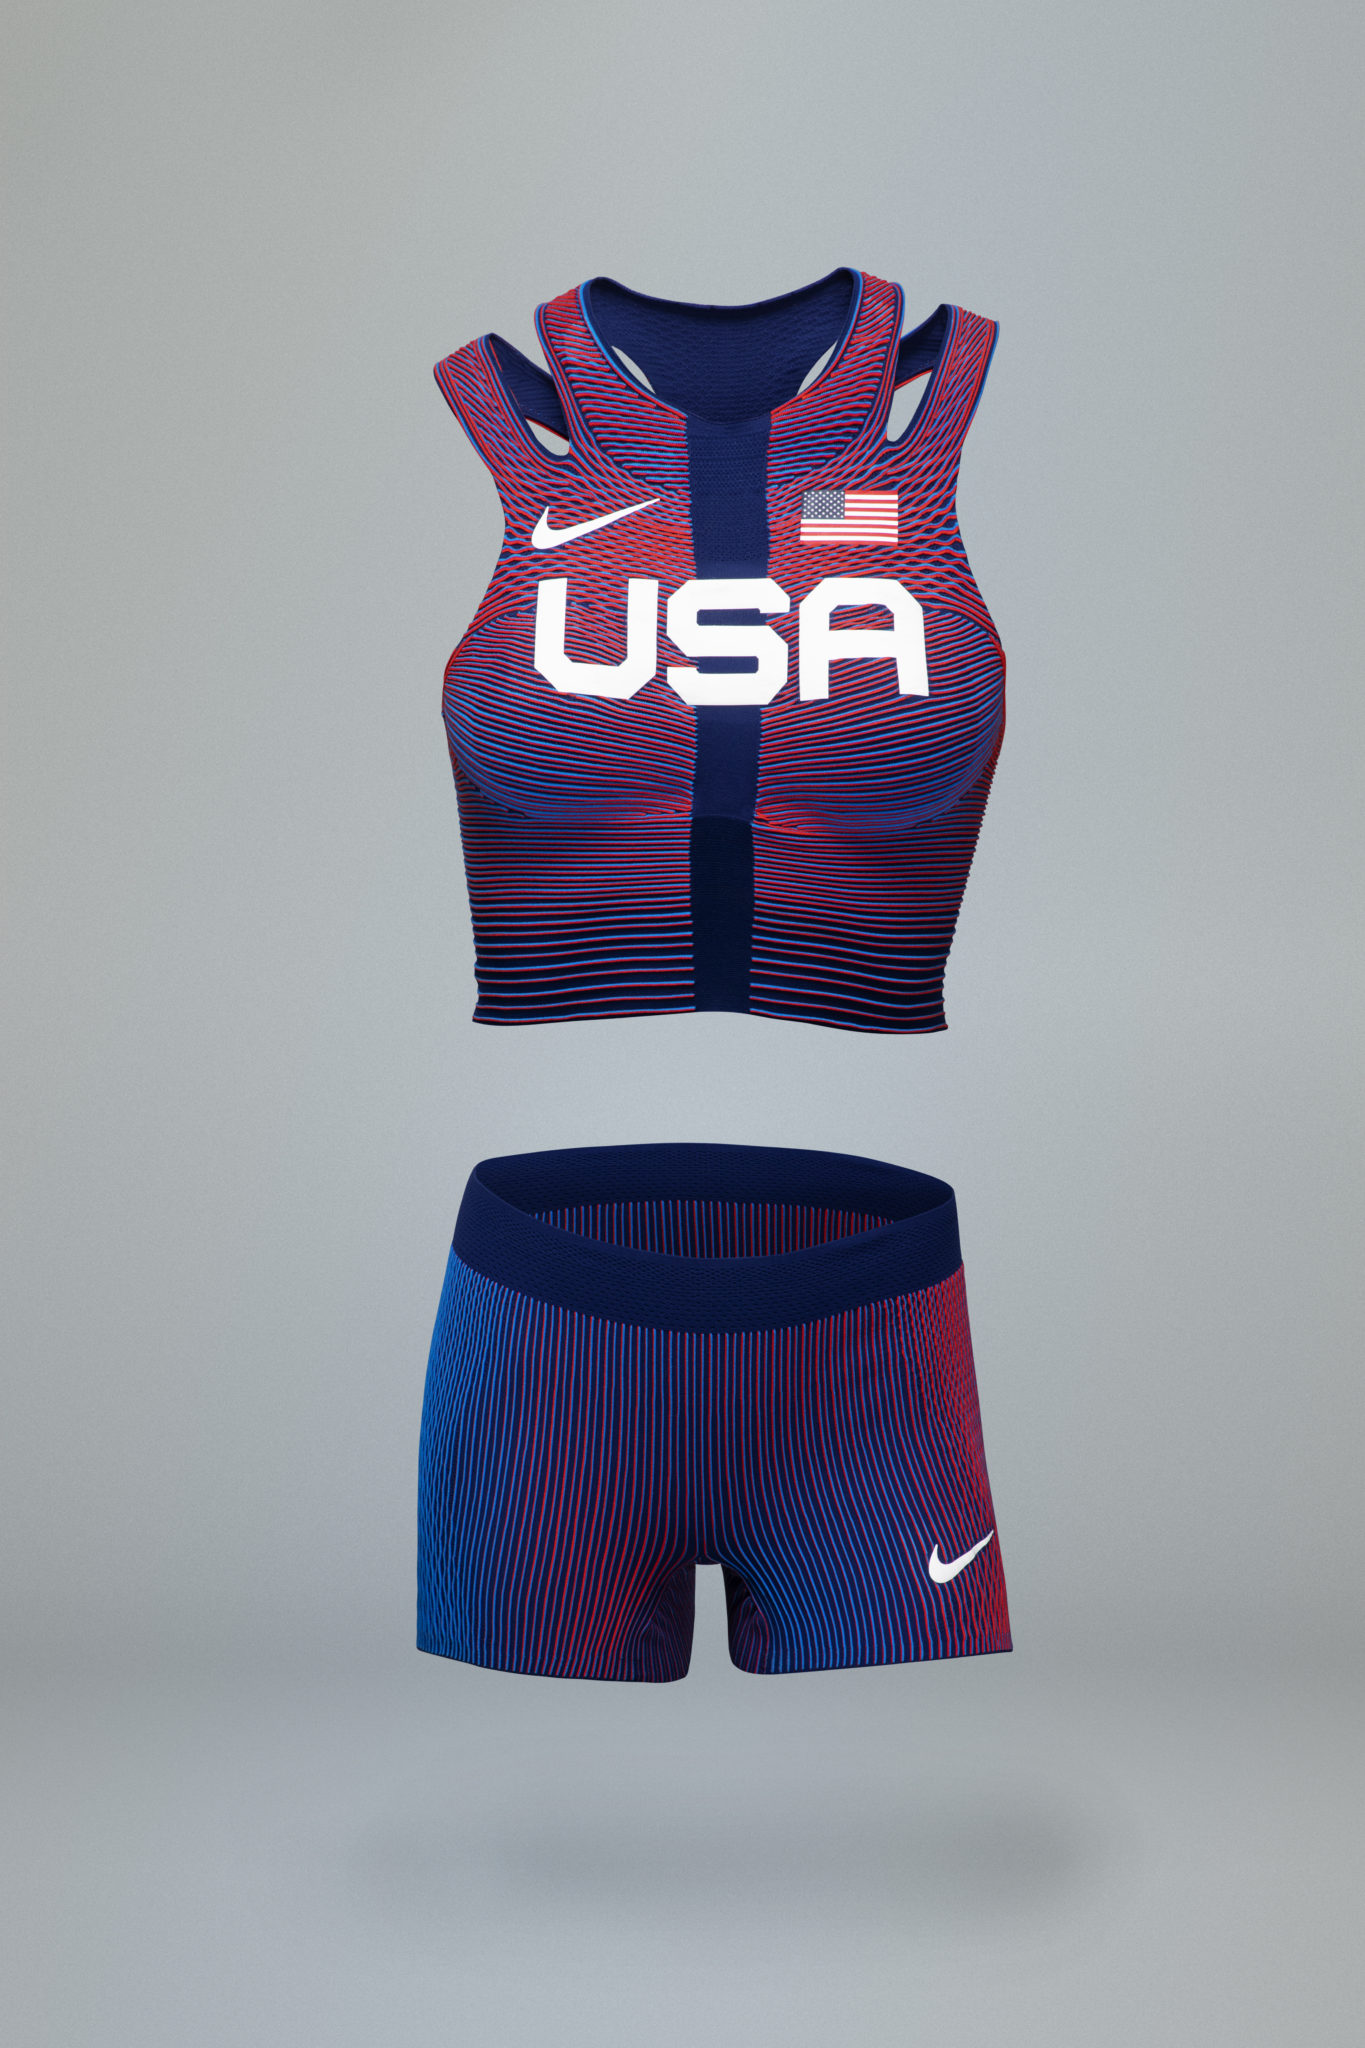 Nike Unveils "Rawdacious" Team USA Jerseys, Olympic Sneaker Colorways